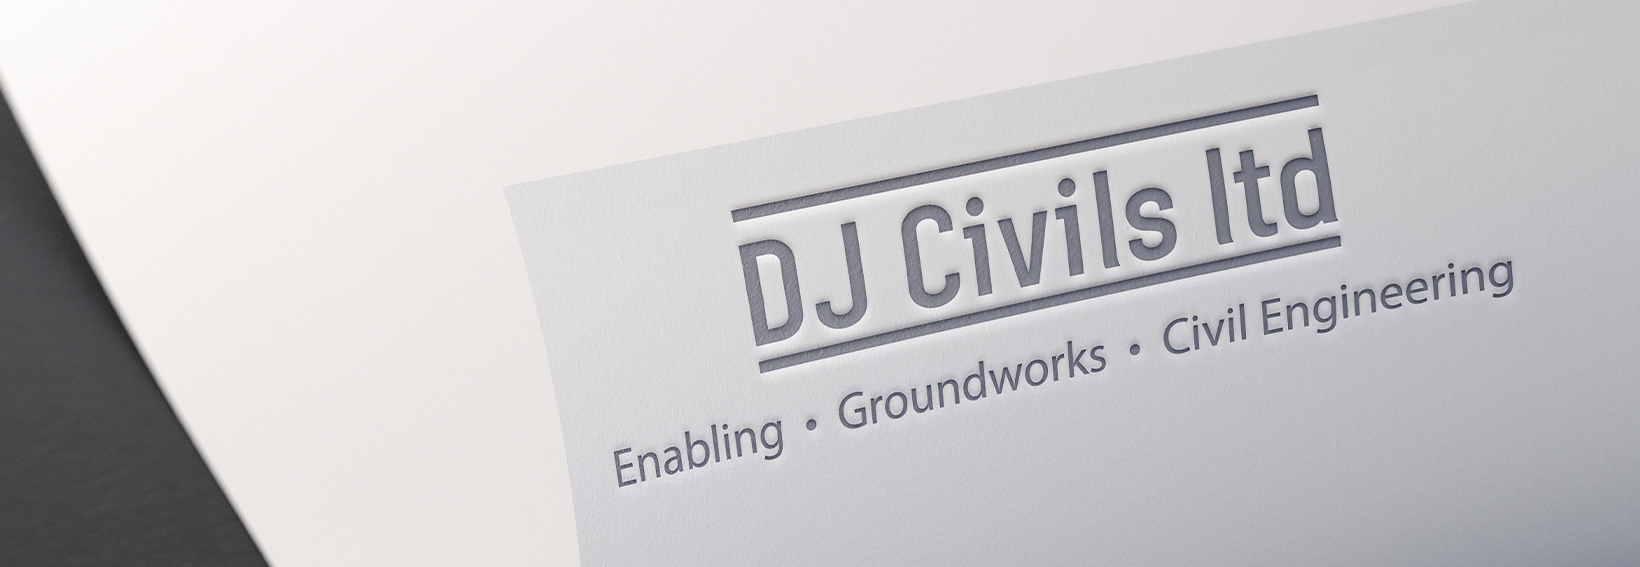 logo design banner, DJ Civils ltd, emblem, icon, letterhead, minster, kent, uk